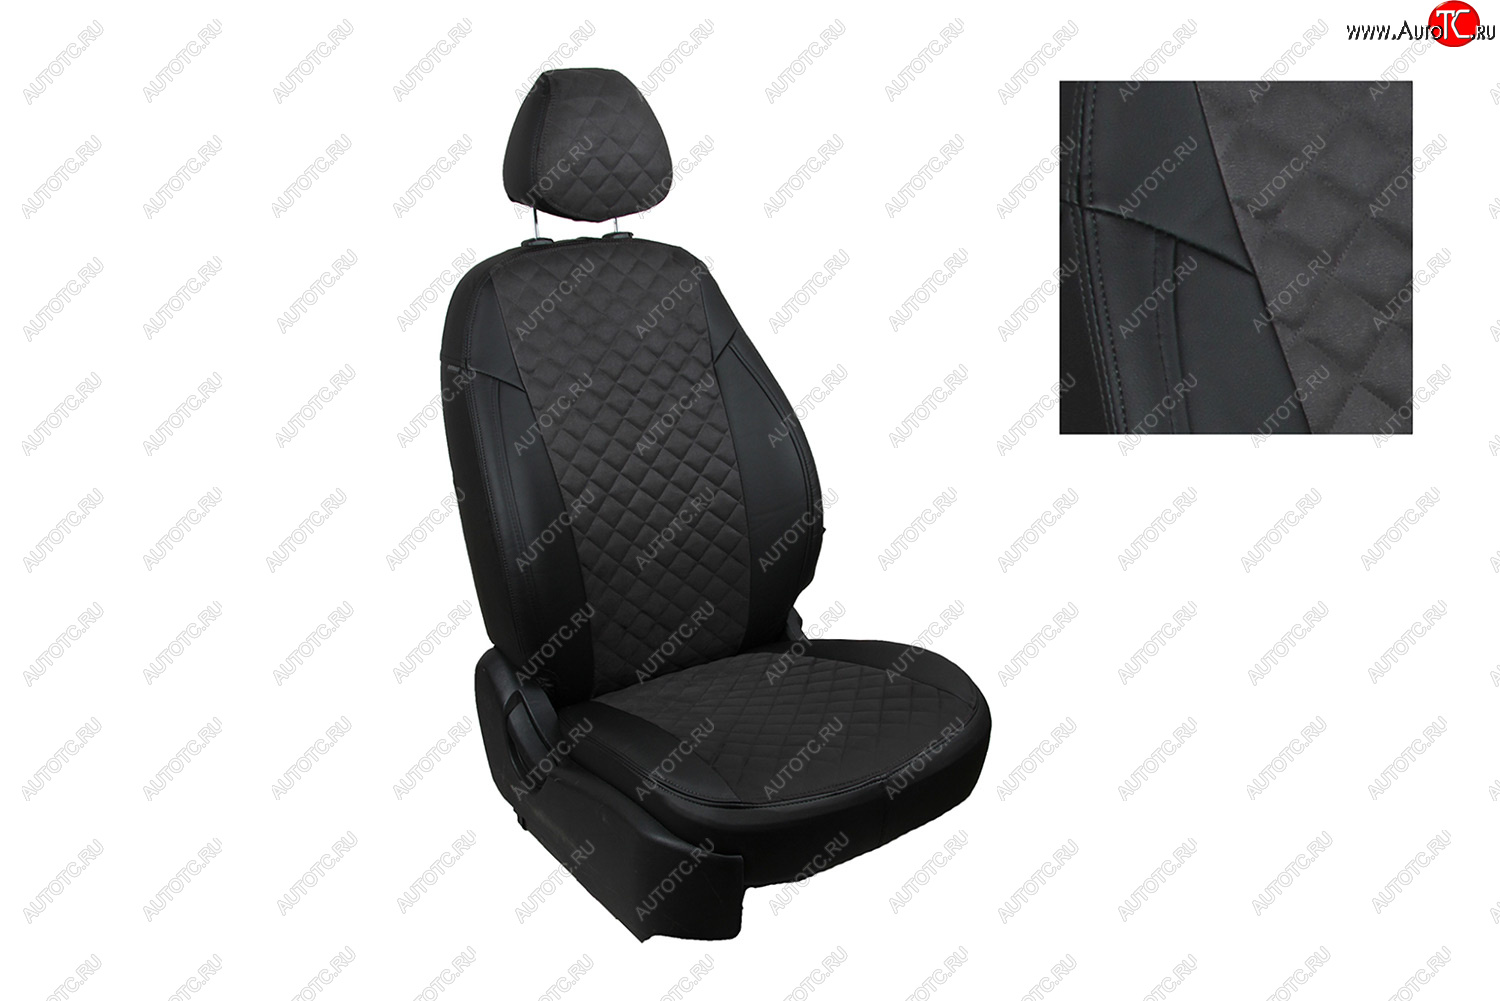 6 699 р. Чехлы для сидений Seintex Ромб Алькантара Daewoo Matiz M100 дорестайлинг (1998-2000)  с доставкой в г. Калуга